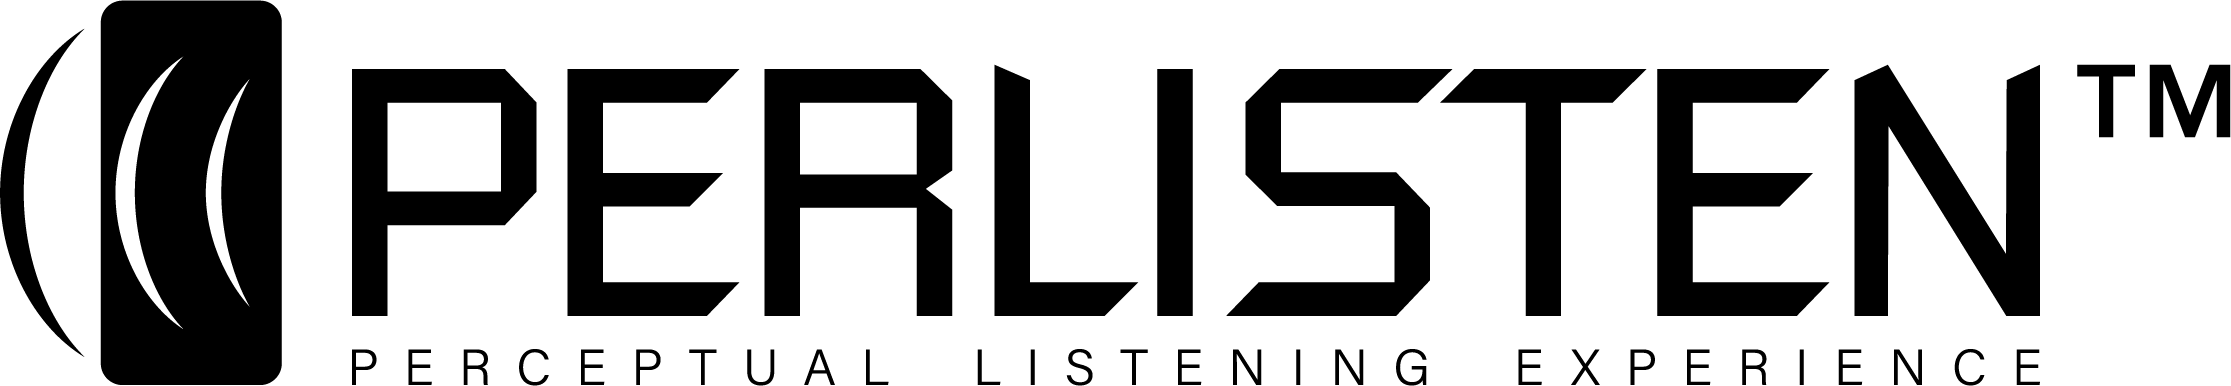 Perlisten Logo